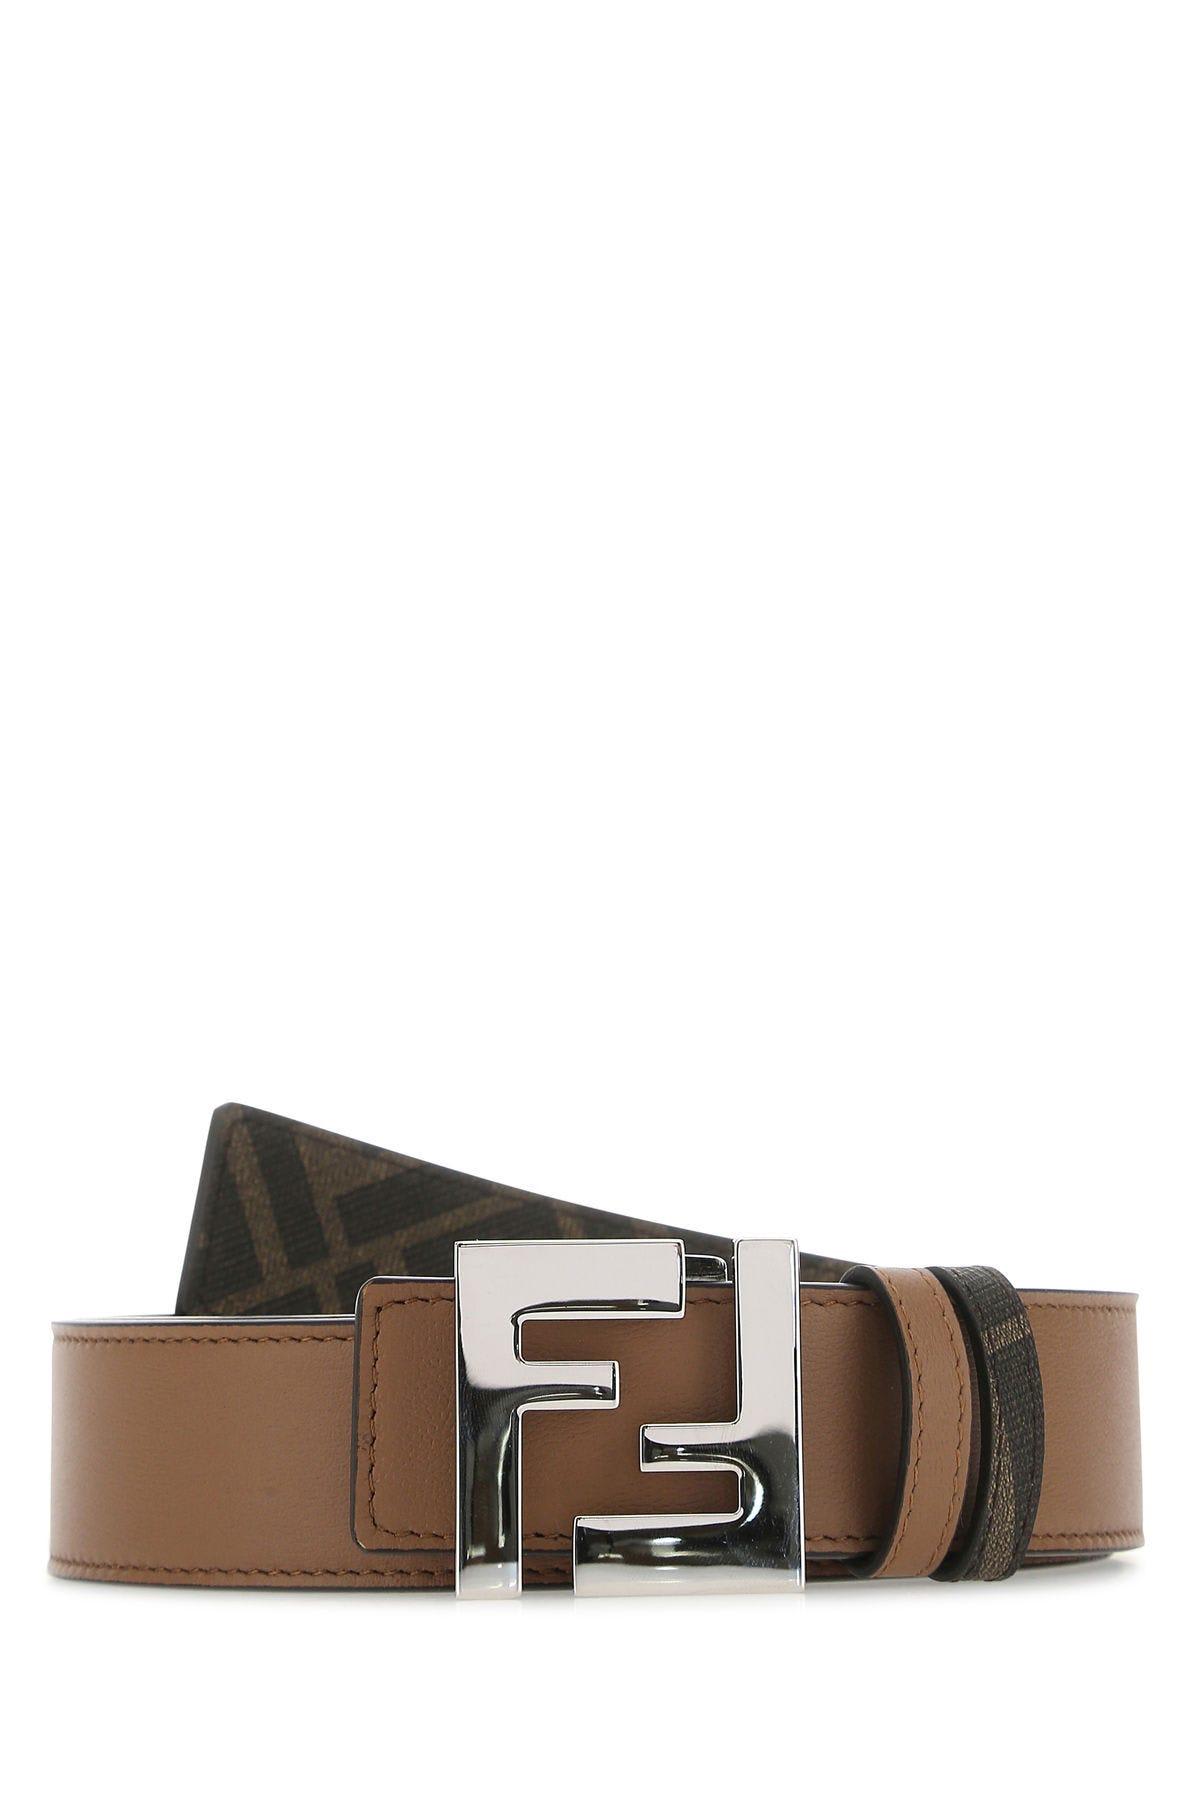 Fendi Brown Leather Reversible Belt